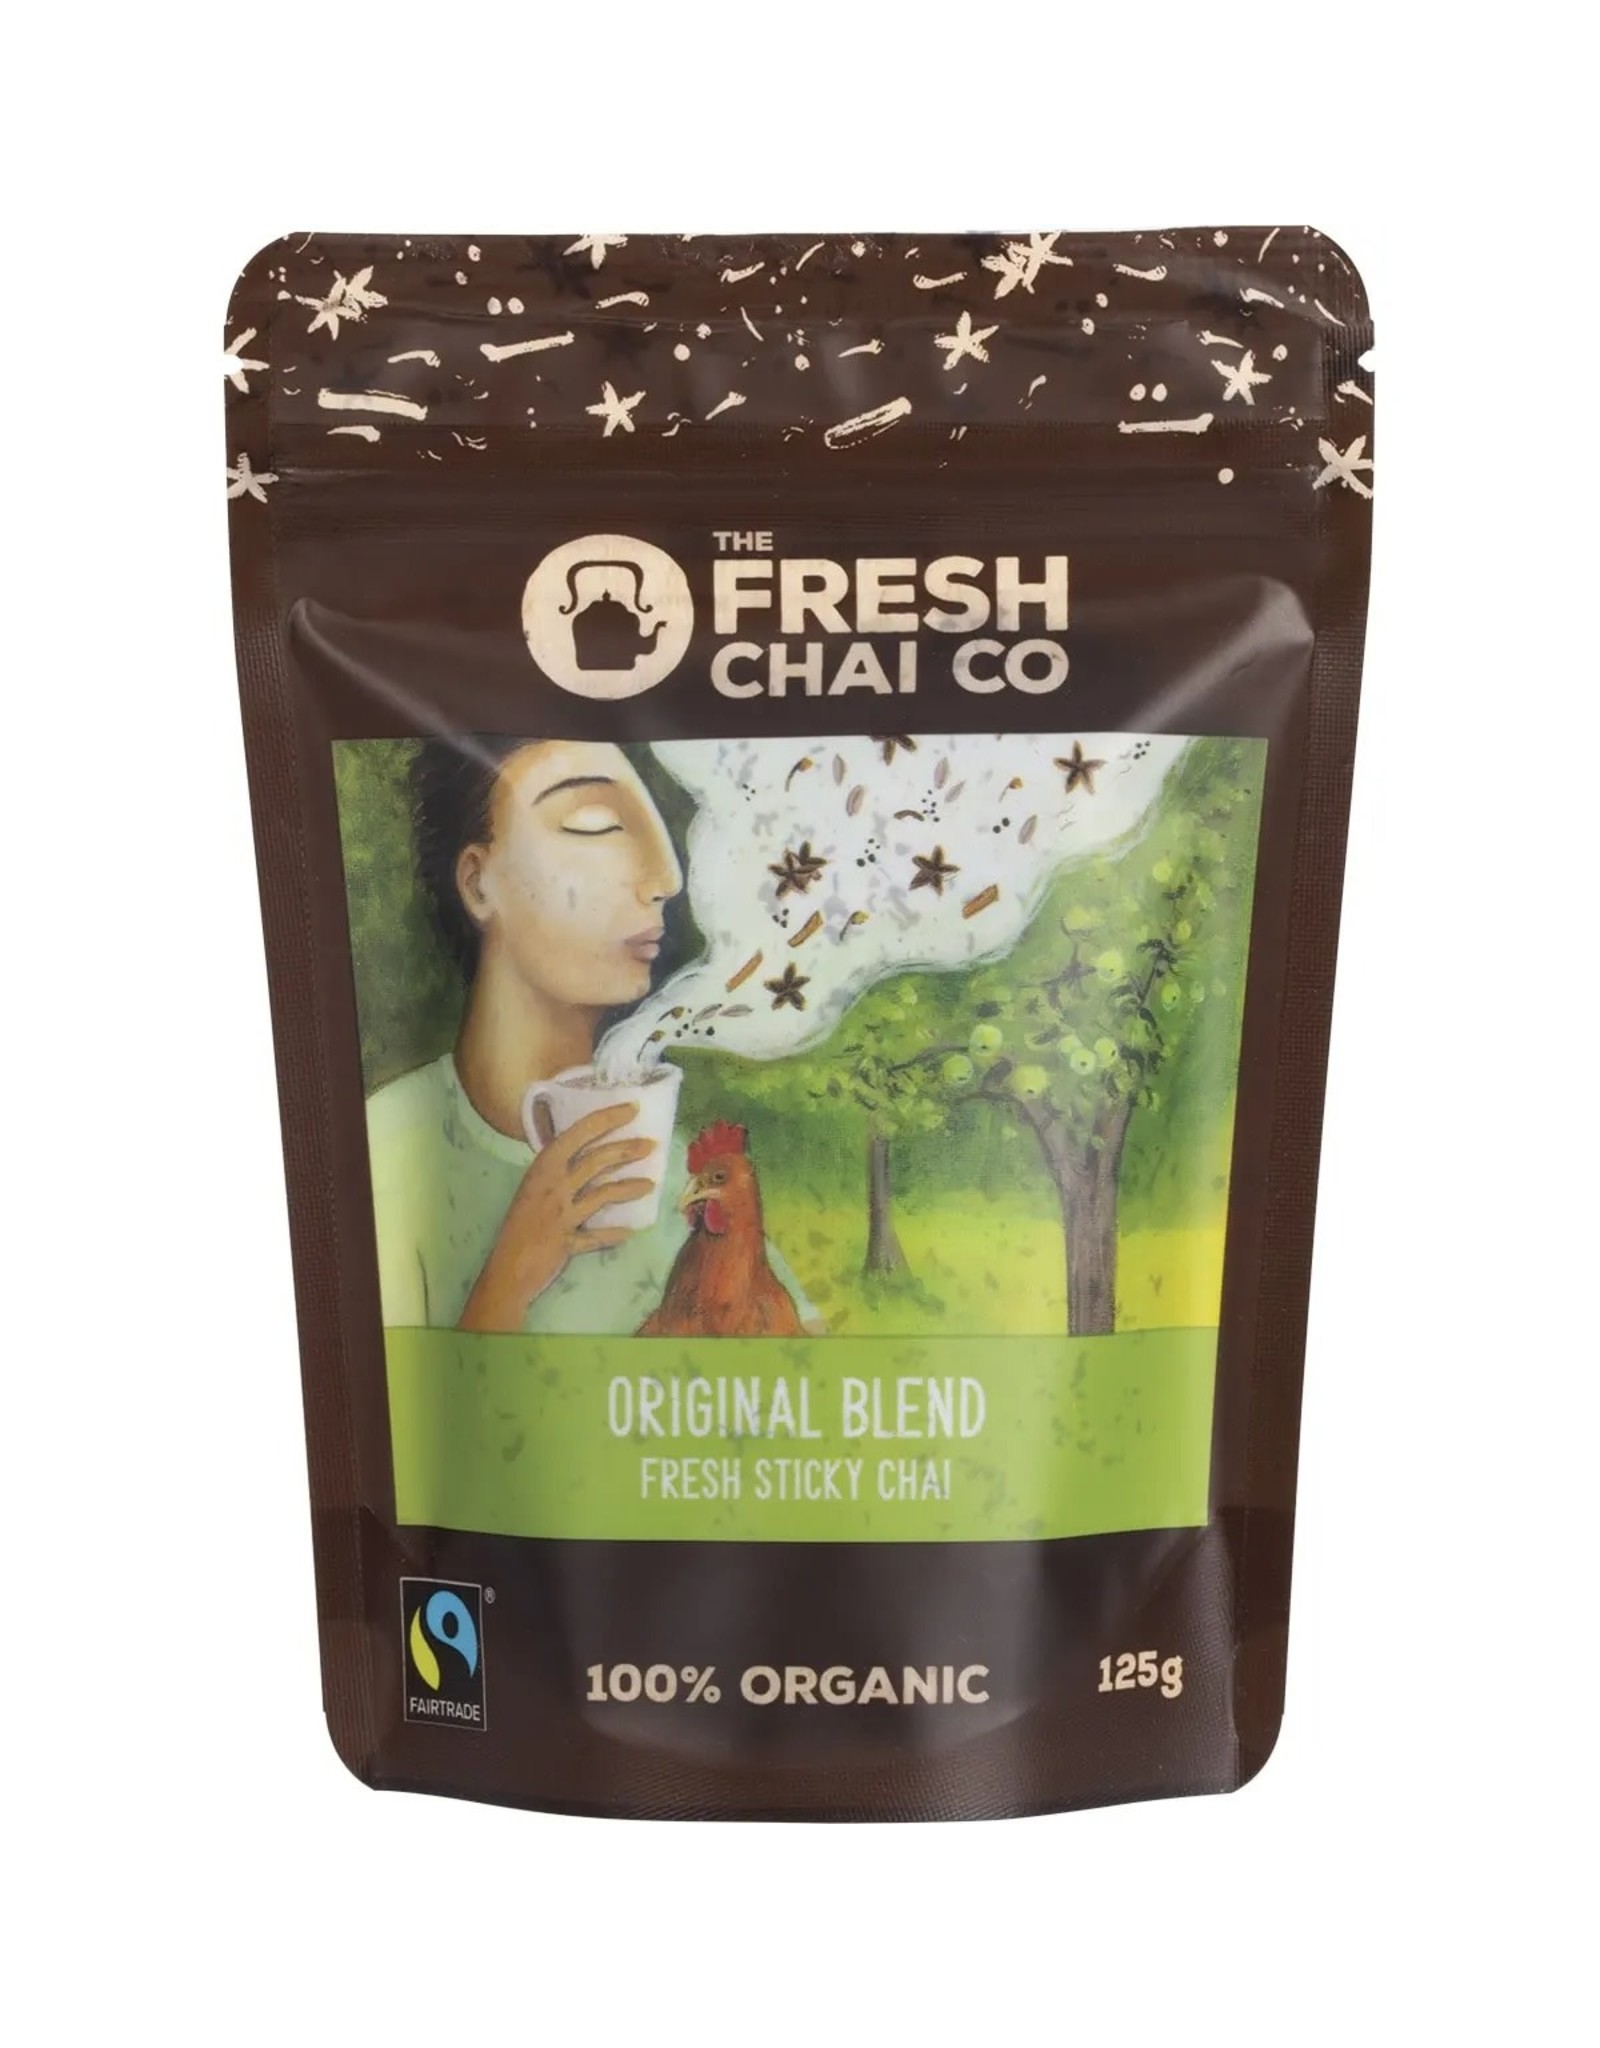 The Fresh Chai Co Original Blend Fresh Sticky Chai